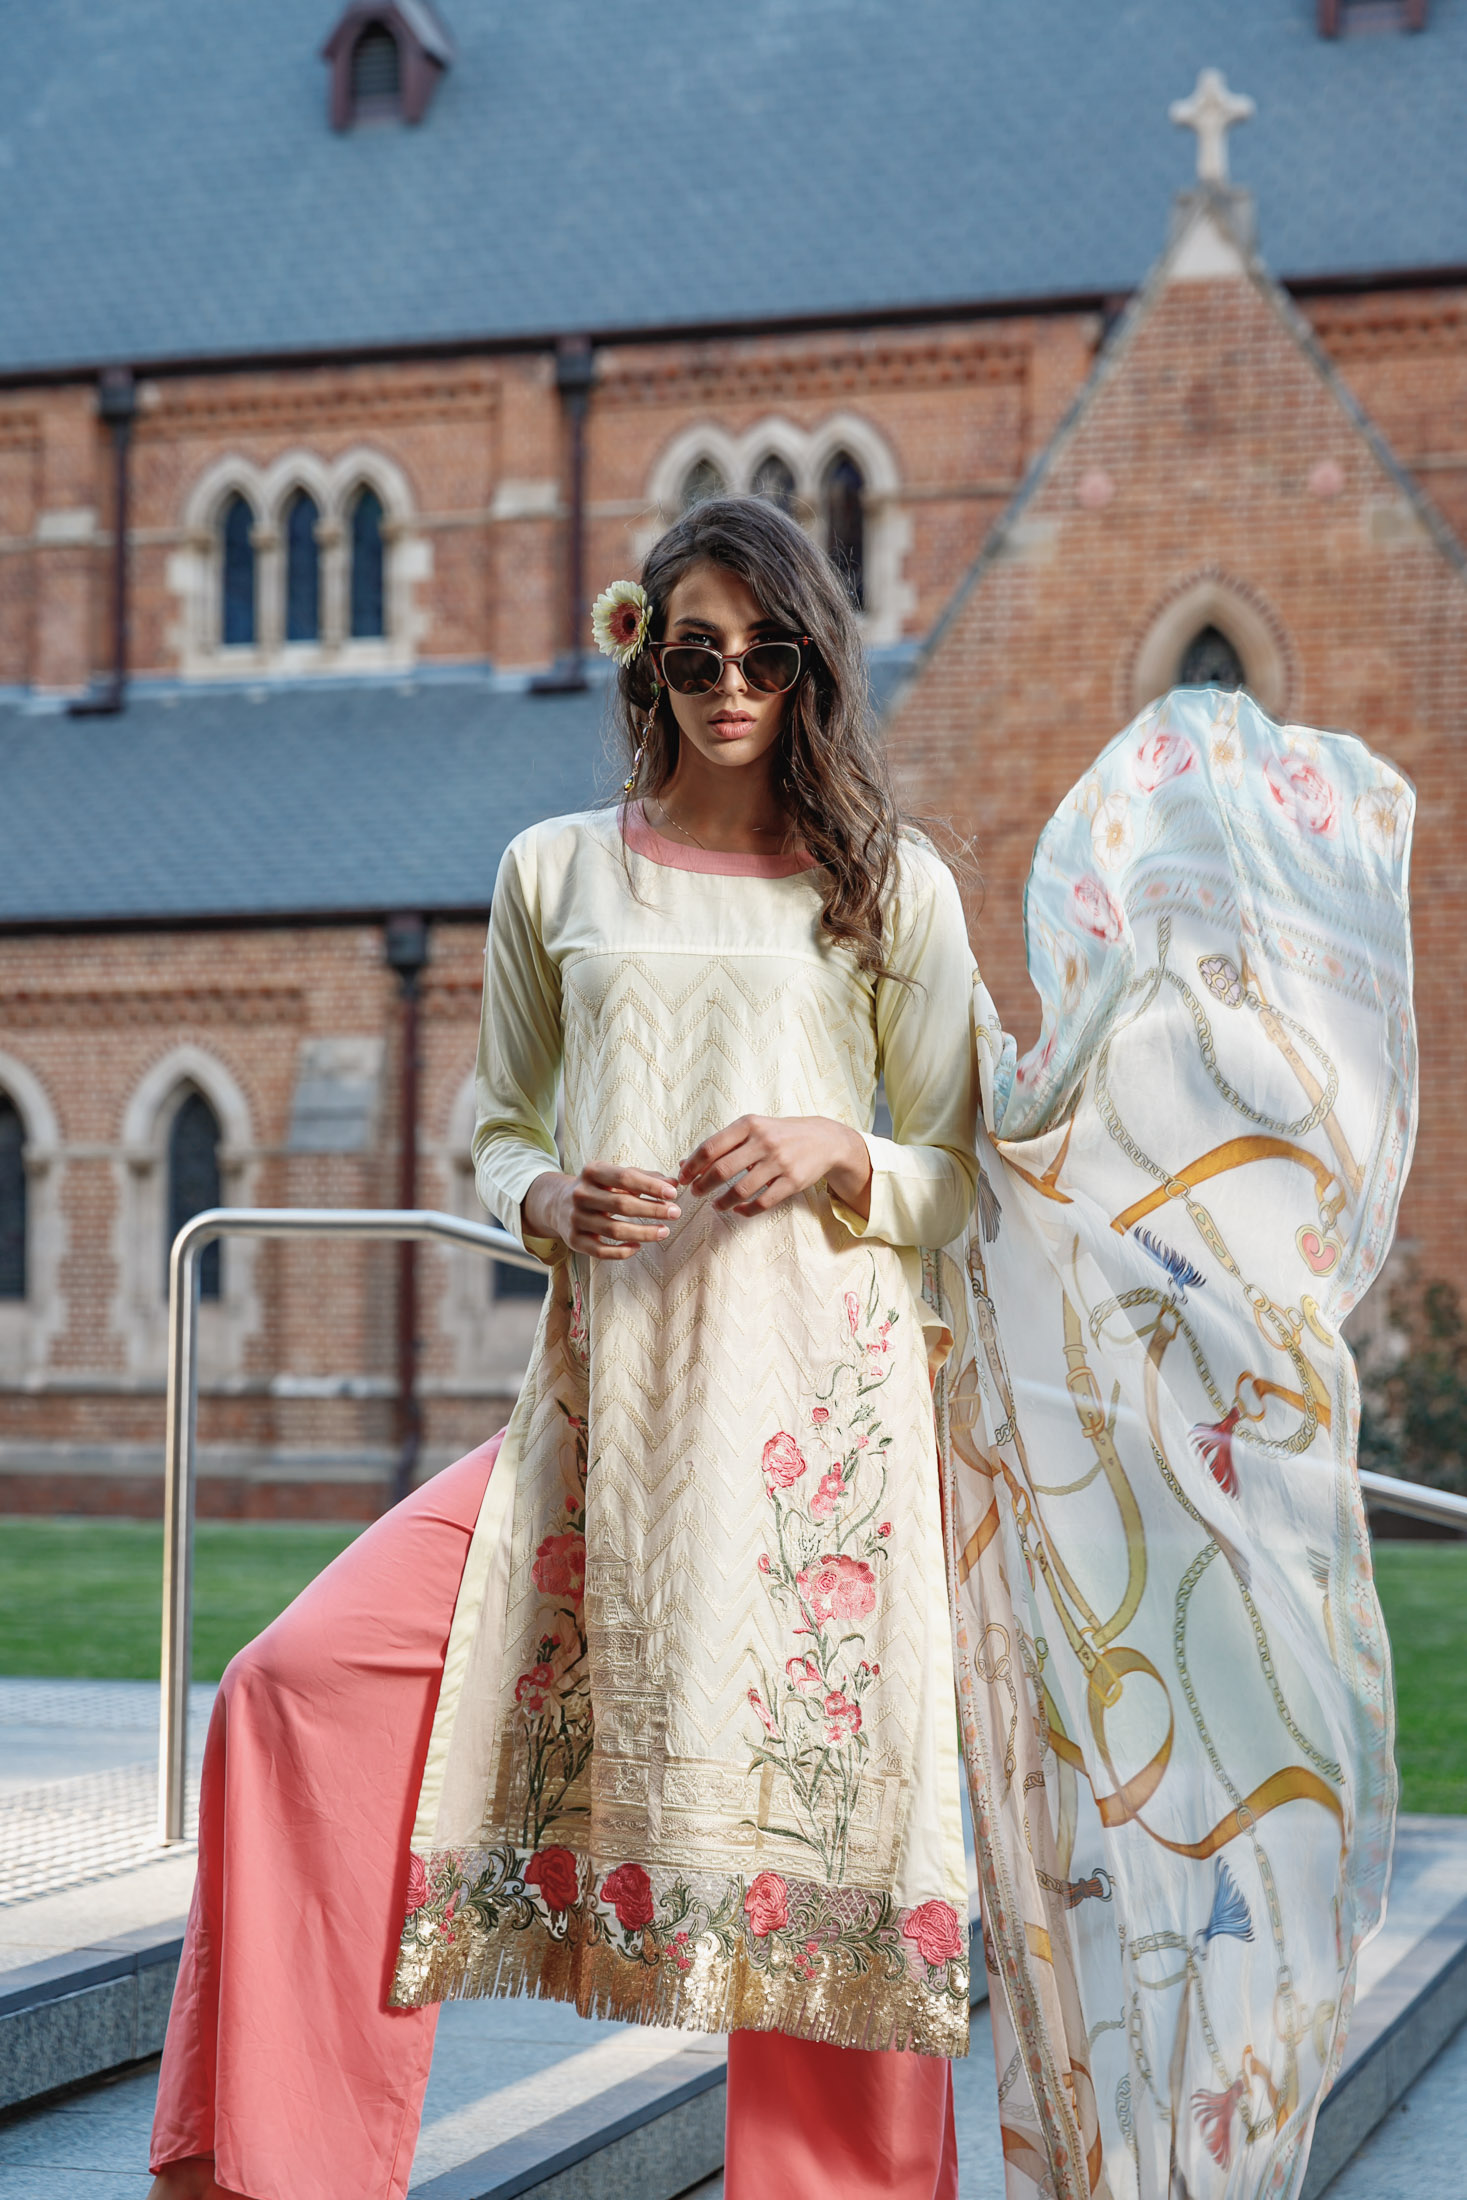 Ammon_Creative-Fashion_Photography-Vogue_Sultana_Bangladesh-Old_Treasury-Perth-008-1493.jpg